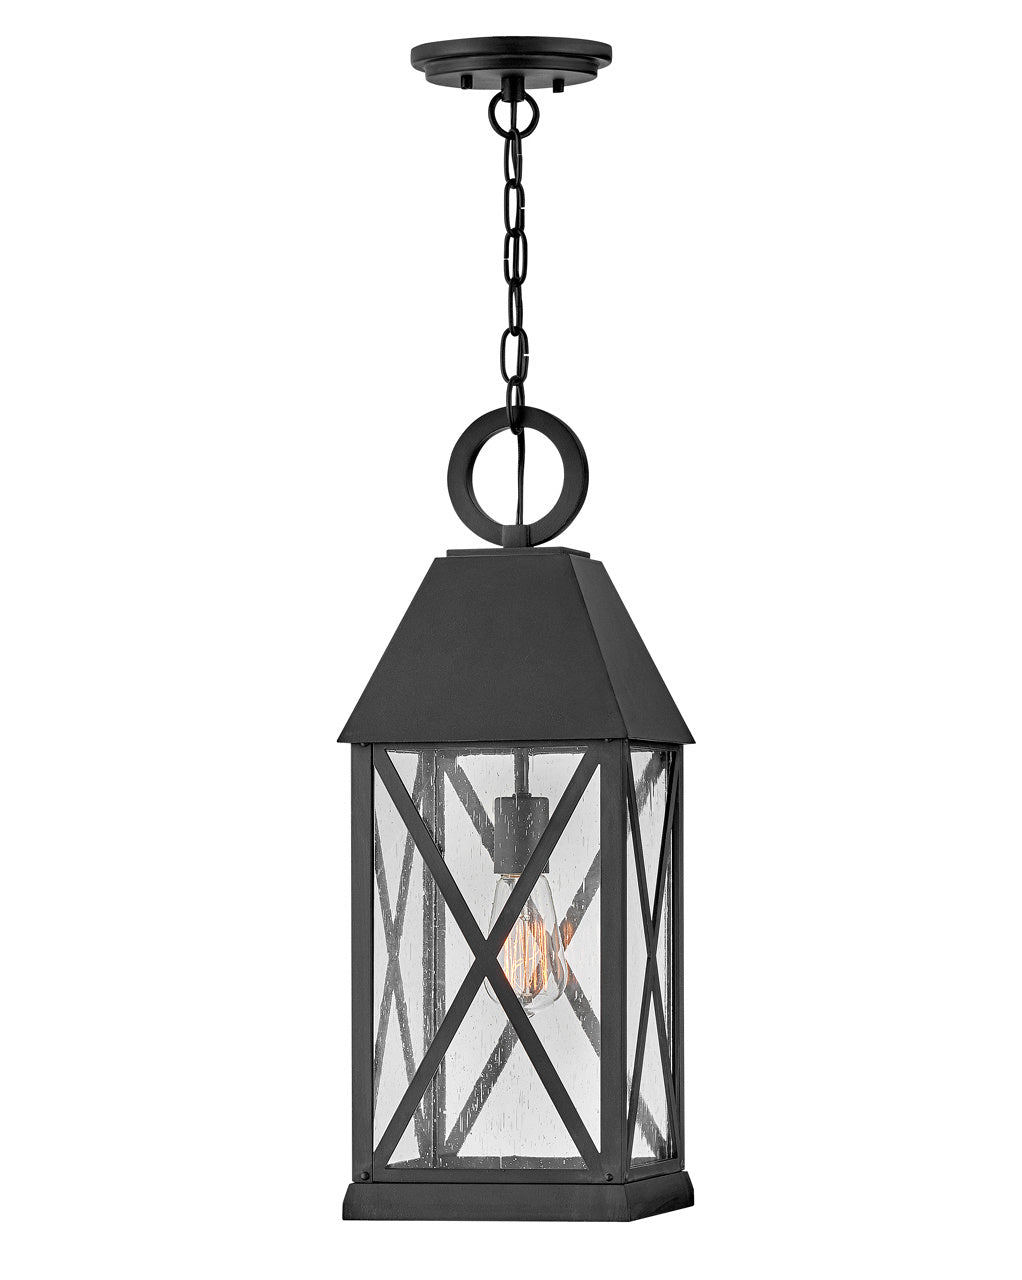 Briar One Light Hanging Lantern in Museum Black by Hinkley Lighting